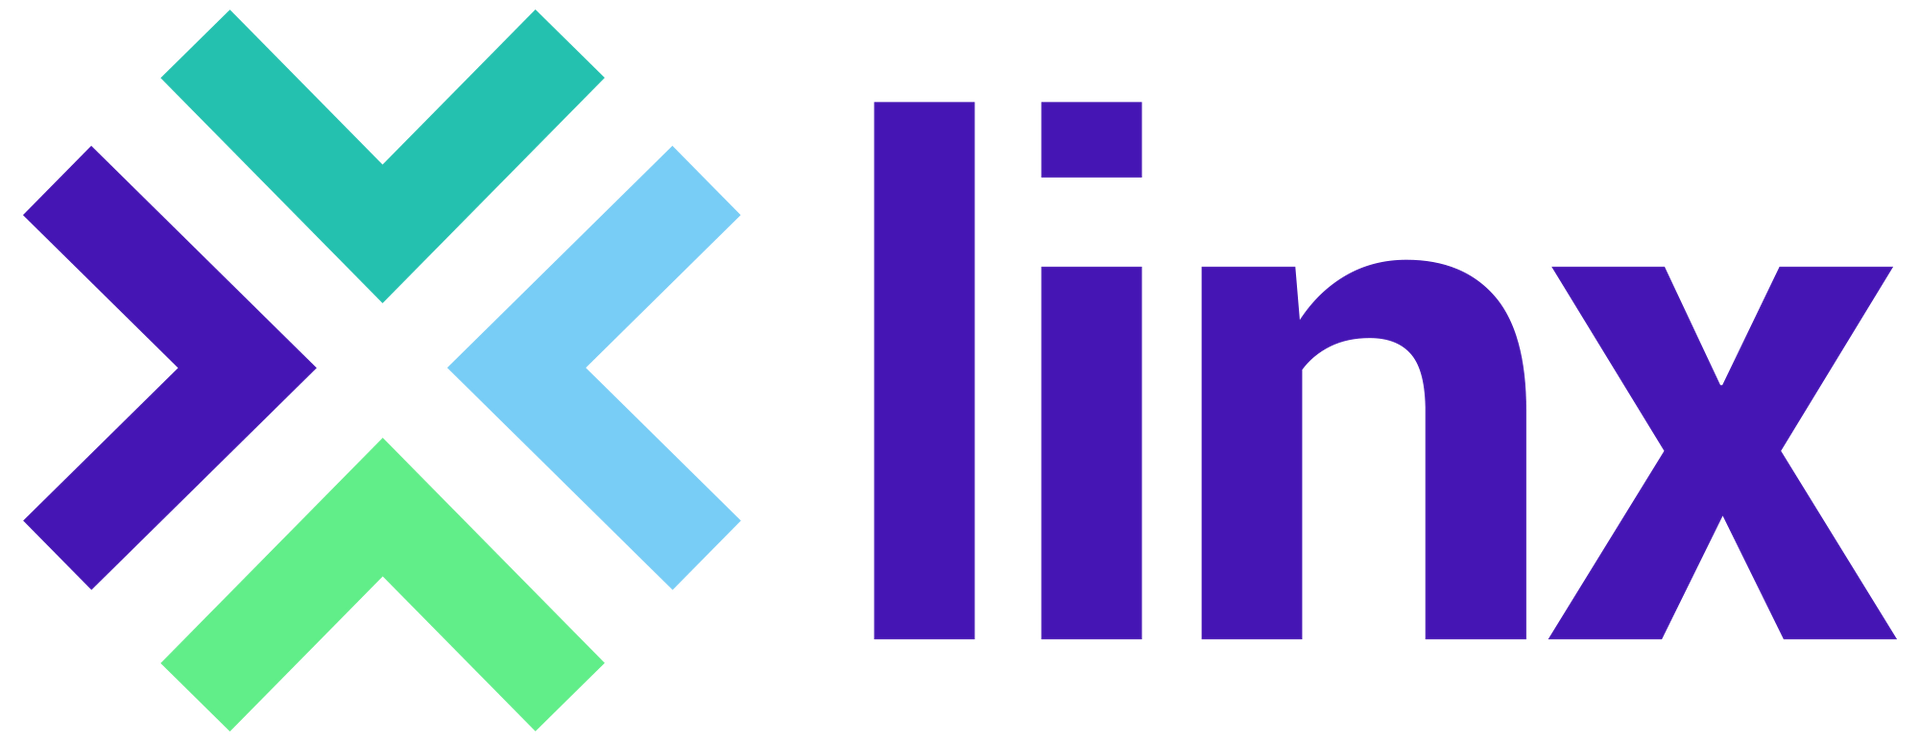 A logo for a company called xlinx